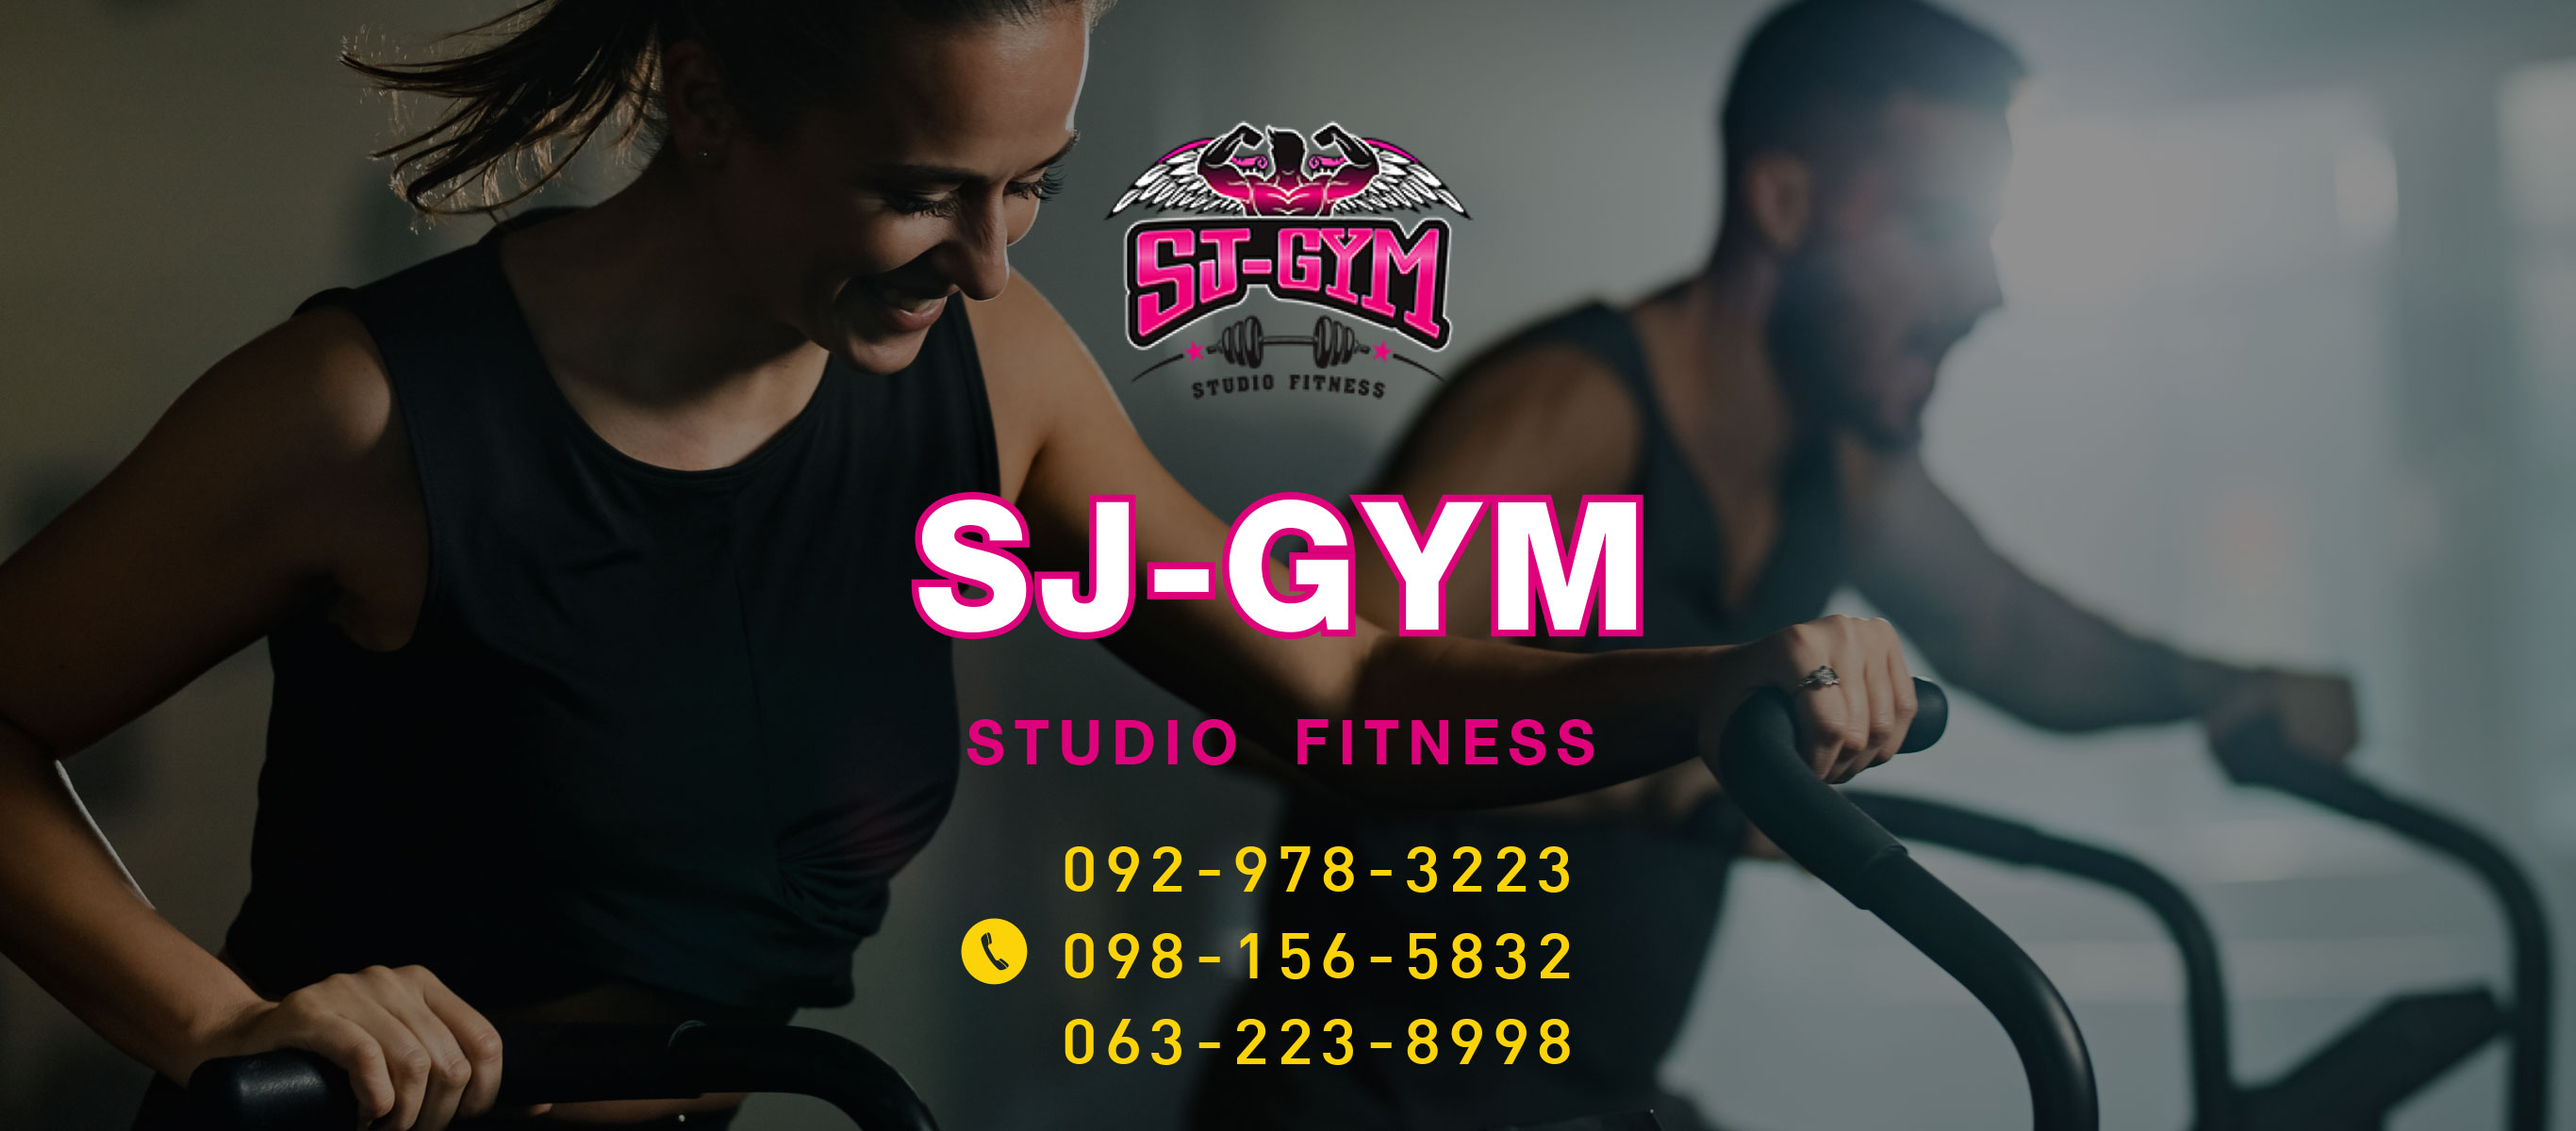 SJ-GYM Studio Fitness